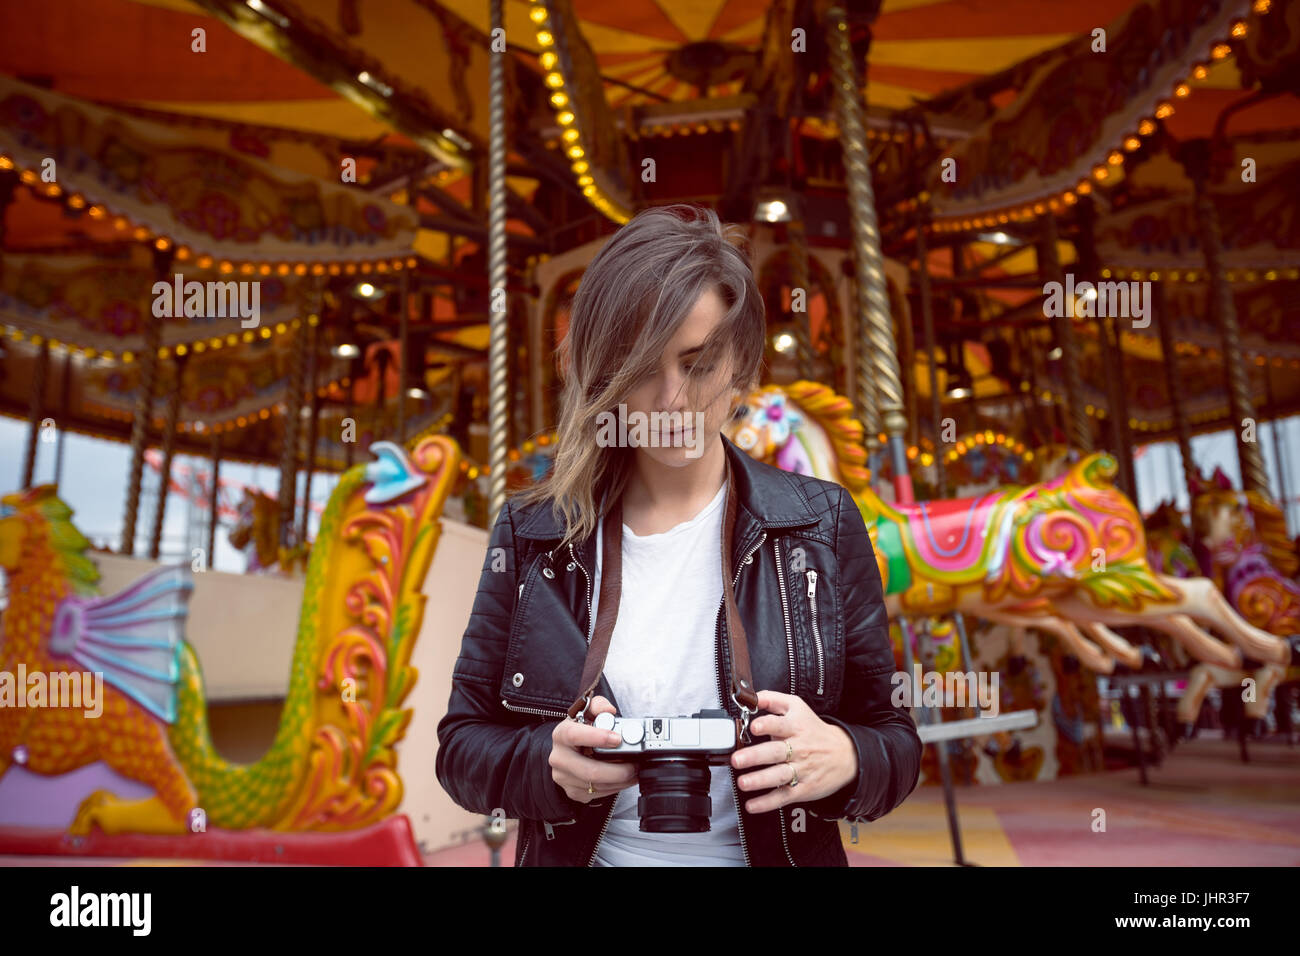 Beautiful woman reviewing photos on digital camera in amusement park Stock Photo